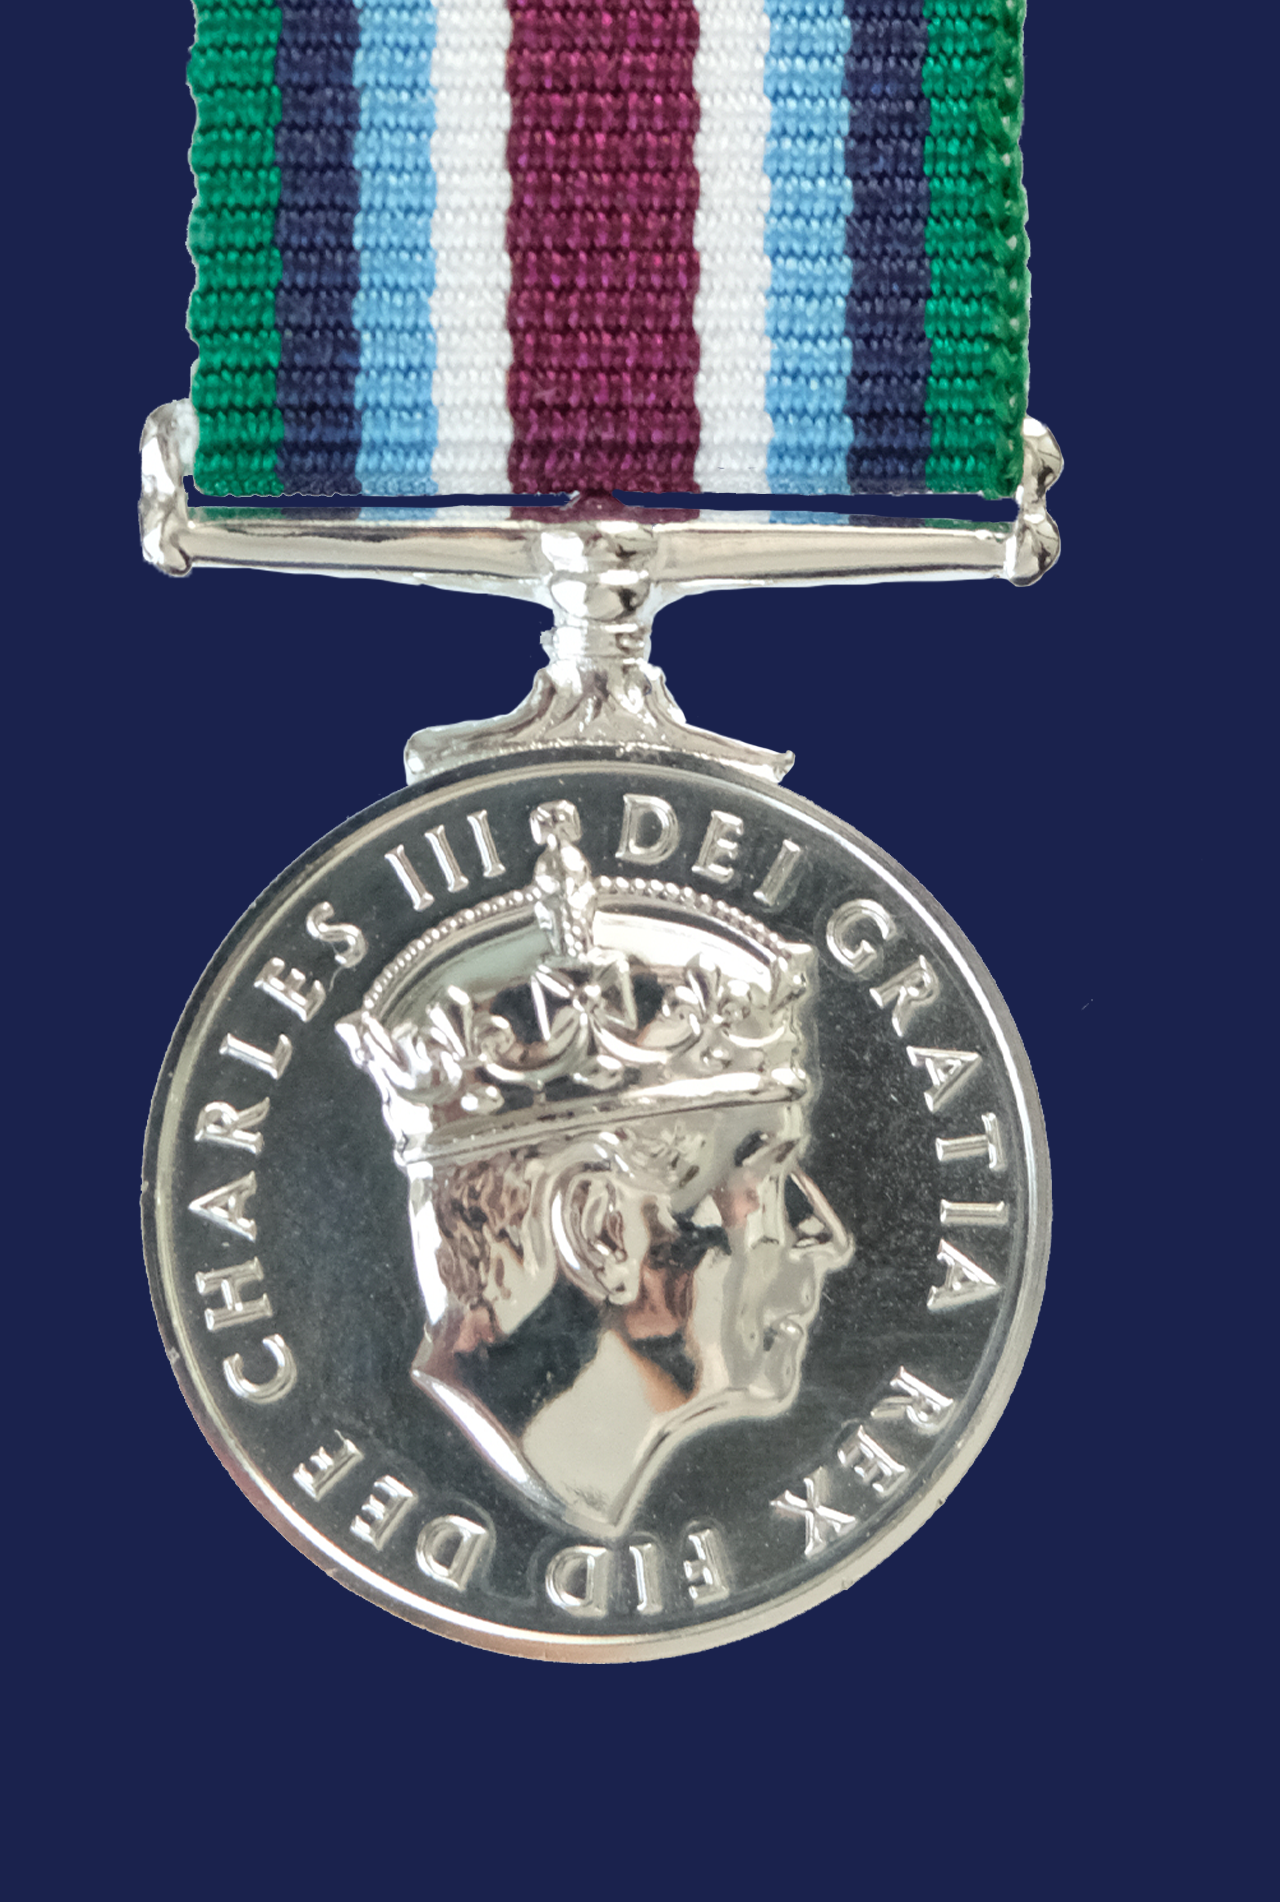 Worcestershire Medal Service: Wider Service Medal - CIIIR